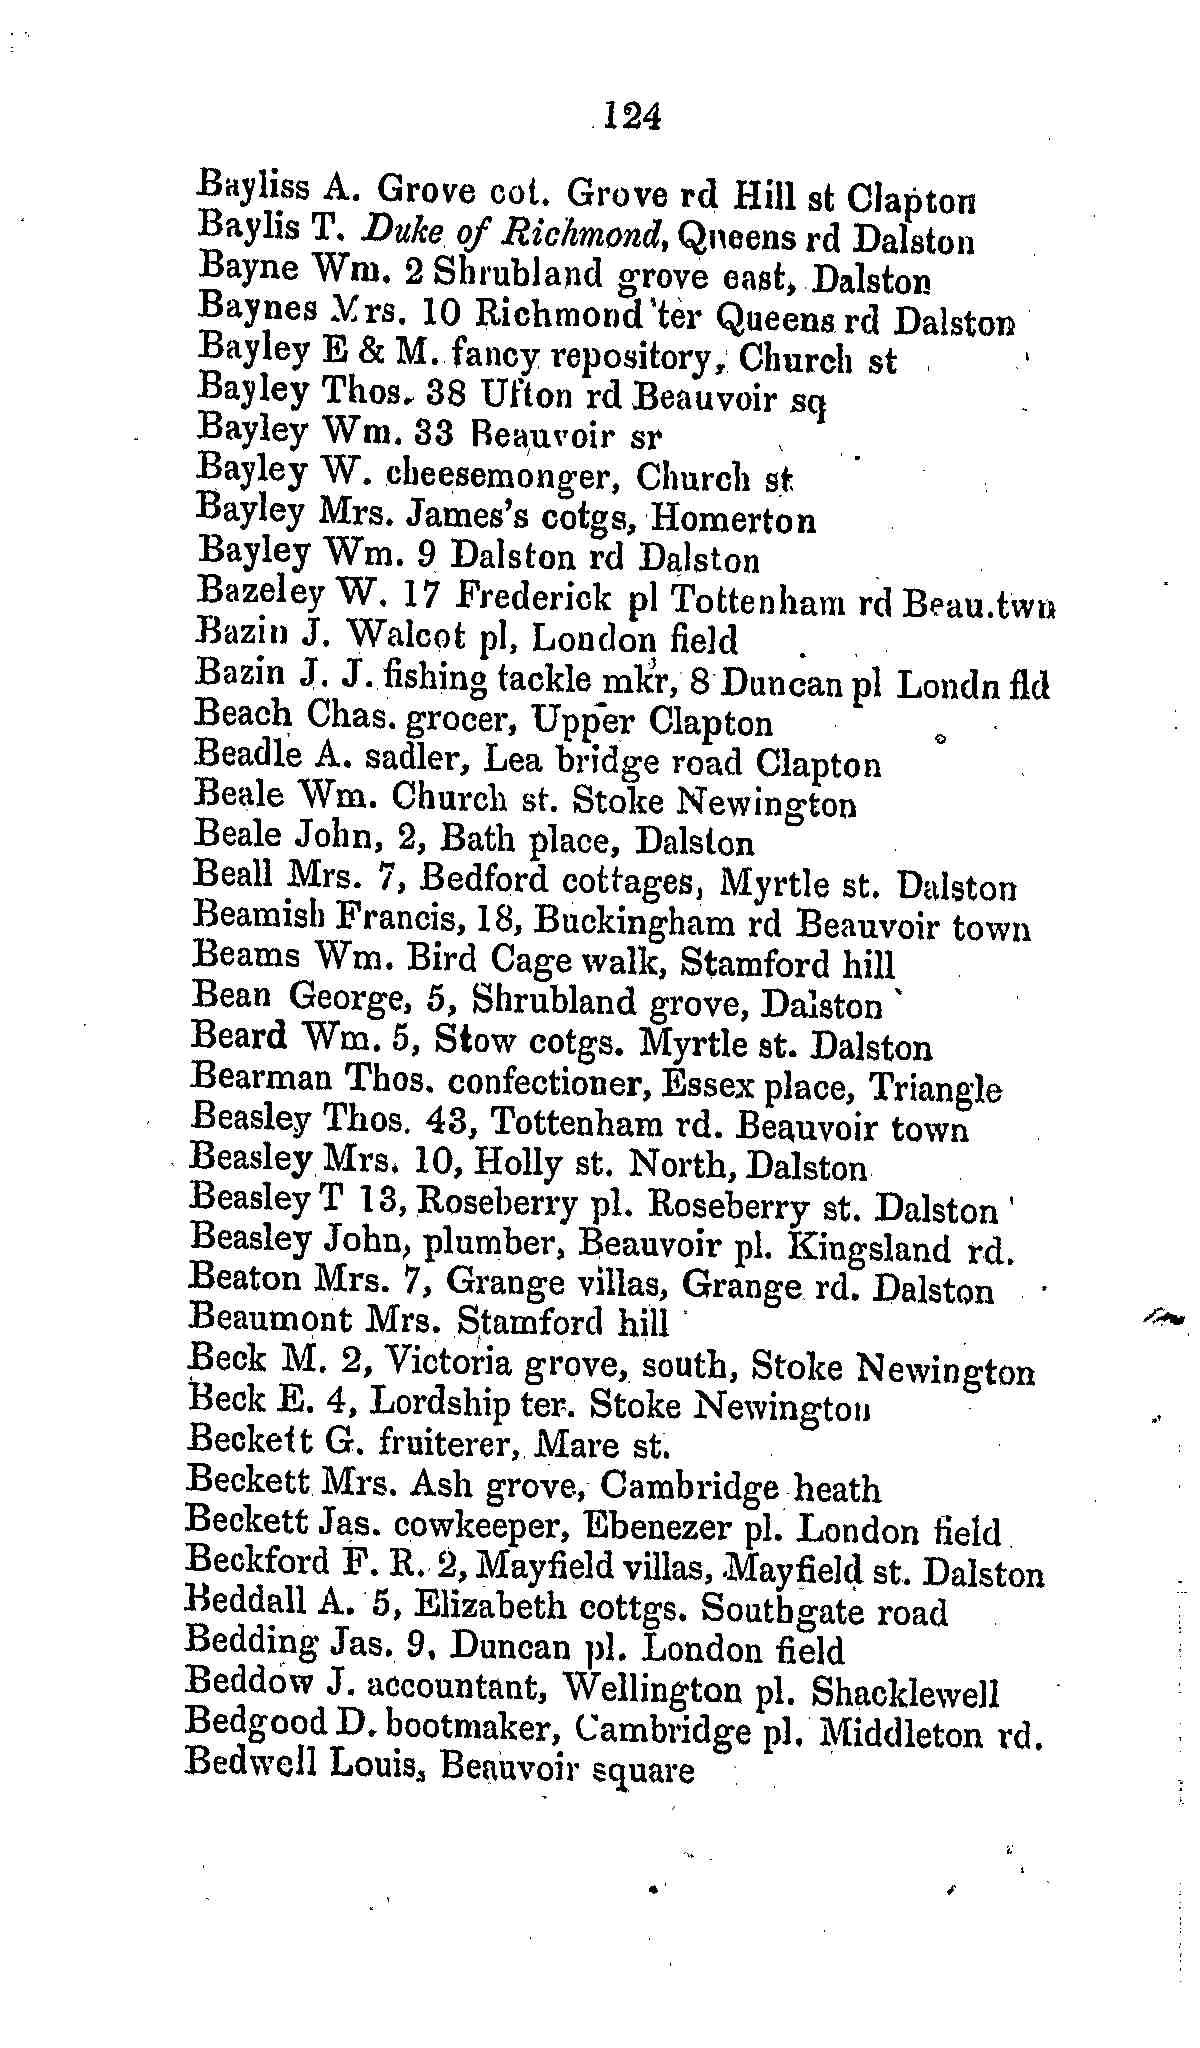 Thos Bearman, confectioner, in the Hackney, Clapton, Homerton, Dalston, Kingsland, Stoke Newington, and De Beauboir Town Directory, 1851